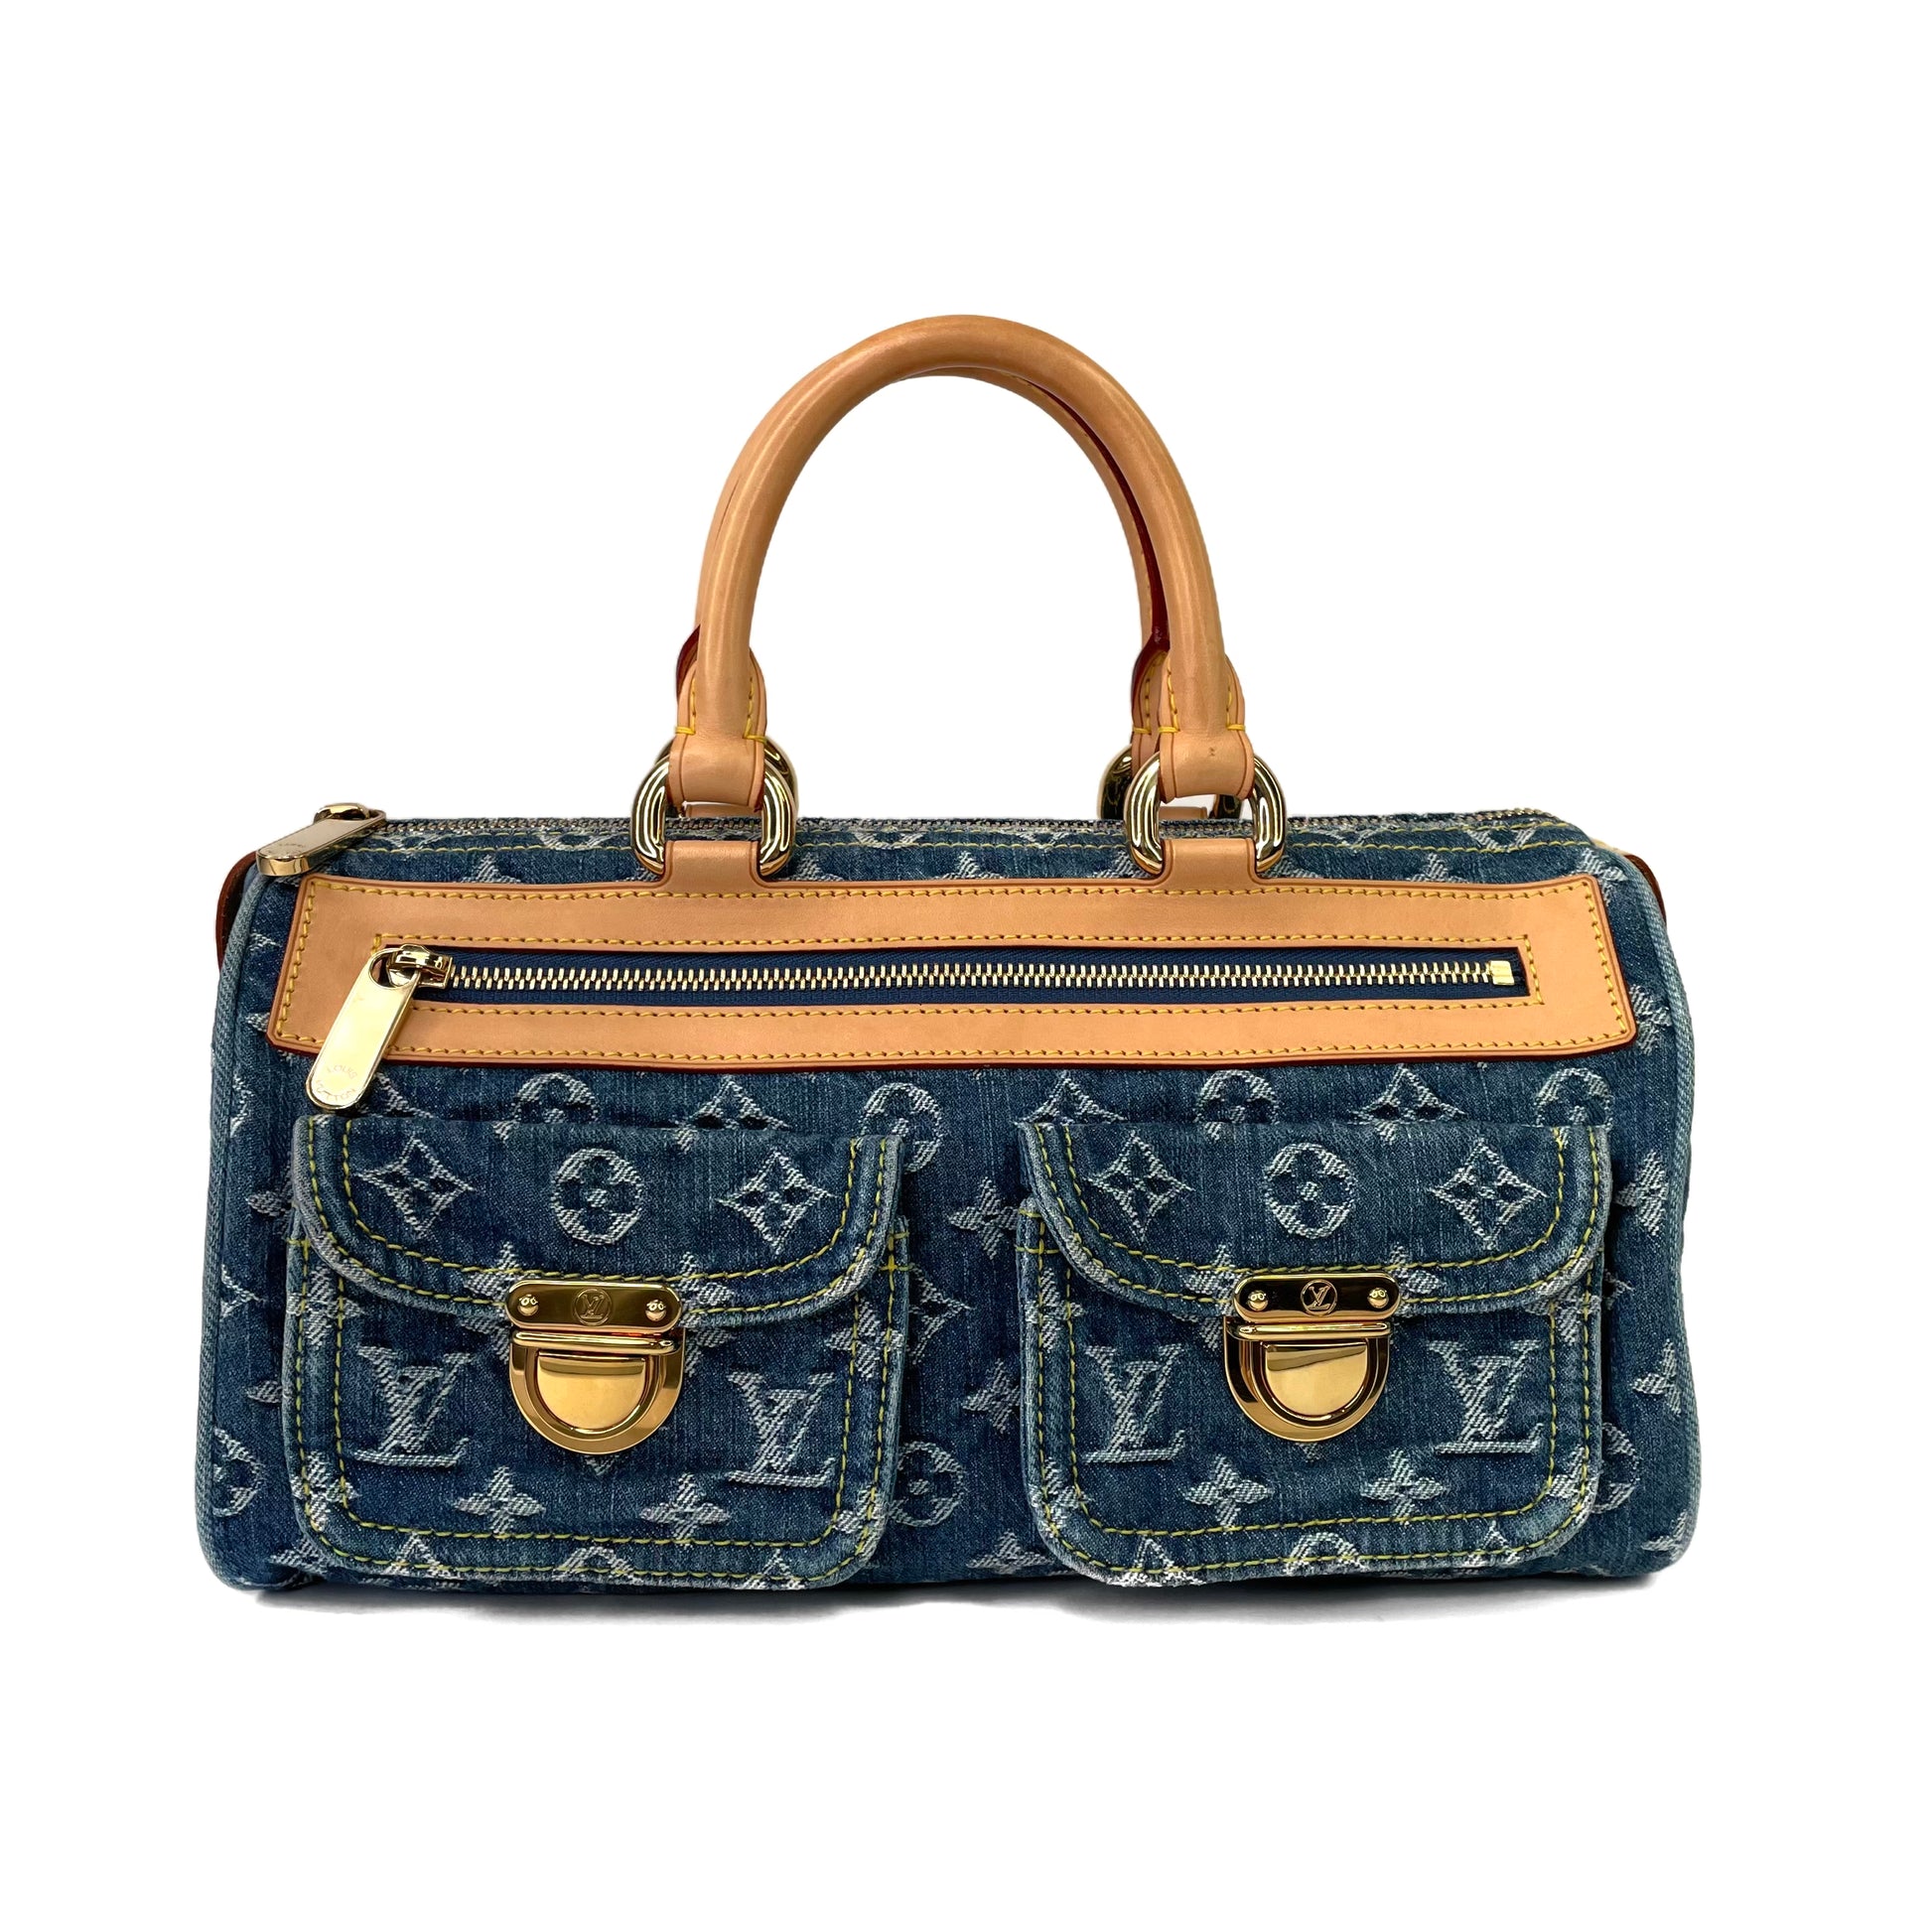 Louis Vuitton Neo Speedy Handbag